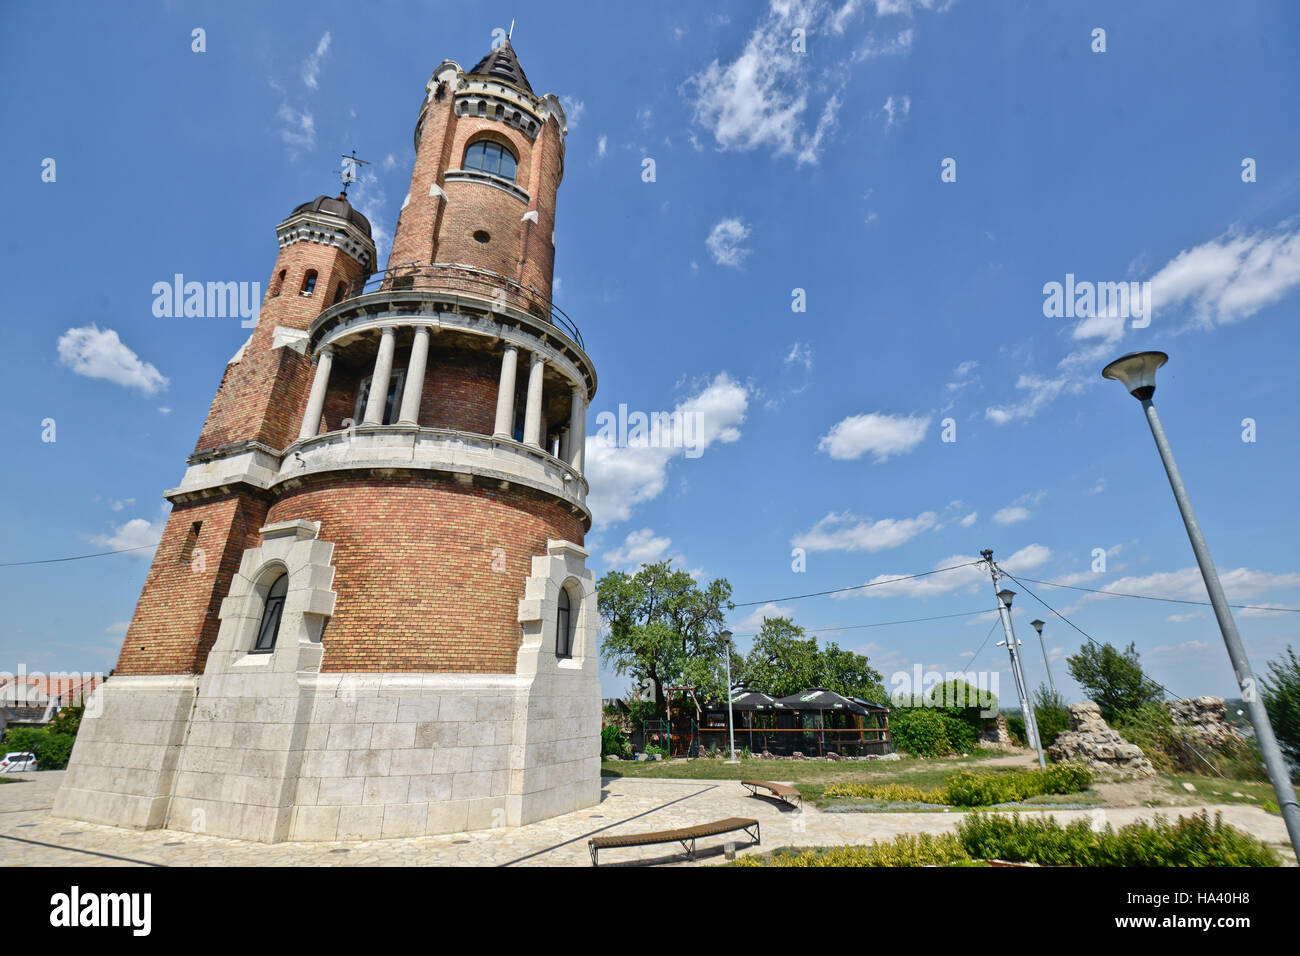 Gardoš Turm oder Millennium Tower, und auch bekannt als Kula Sibinjanin Janka. Stadtteil Zemun, Belgrad, Serbien Stockfoto